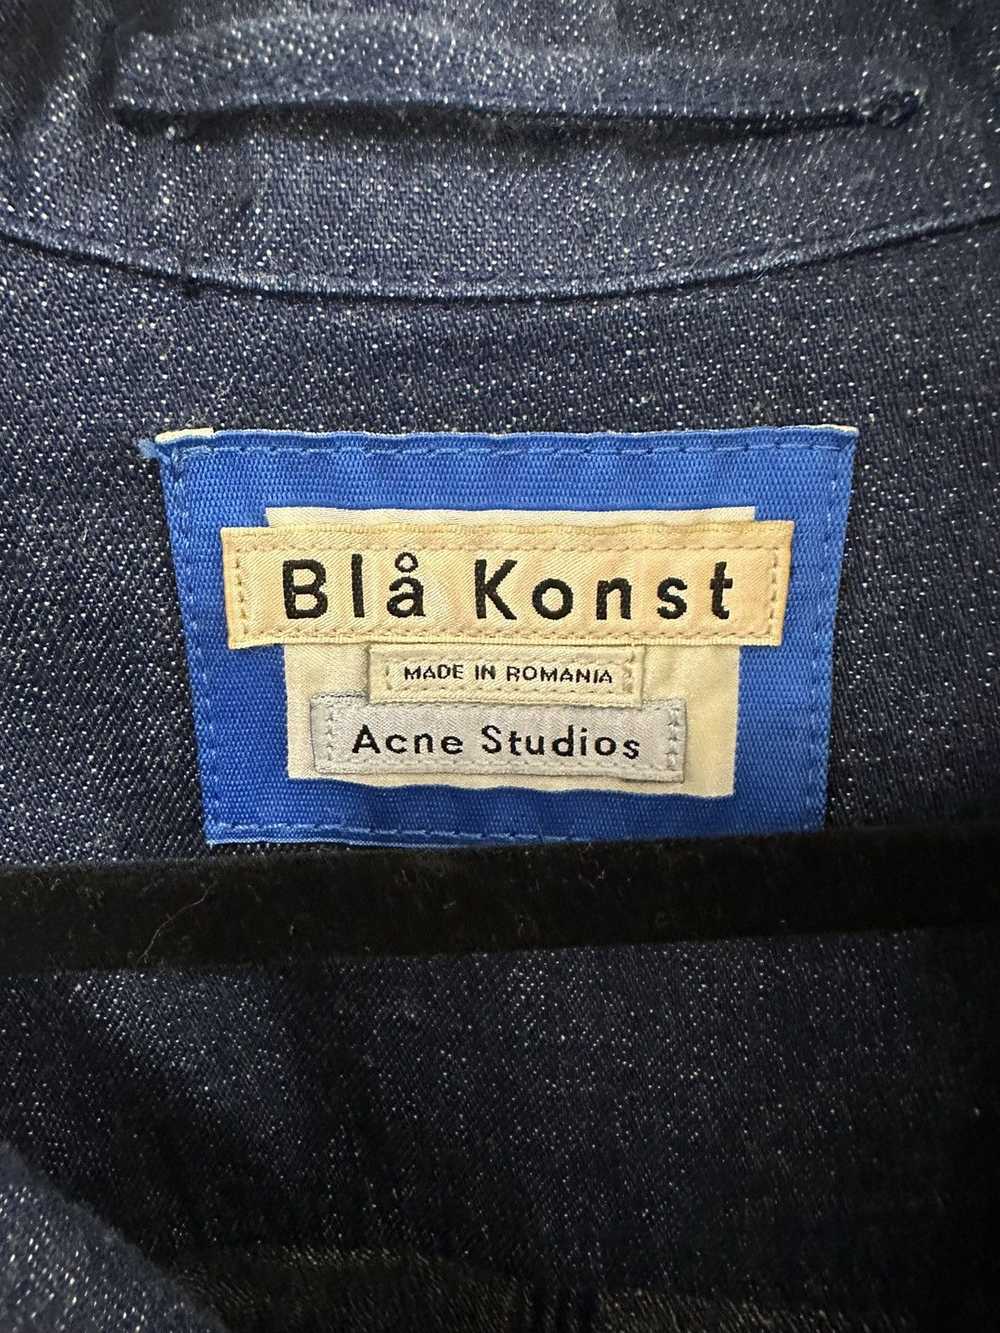 Acne Studios Acne studio denim jacket - image 4